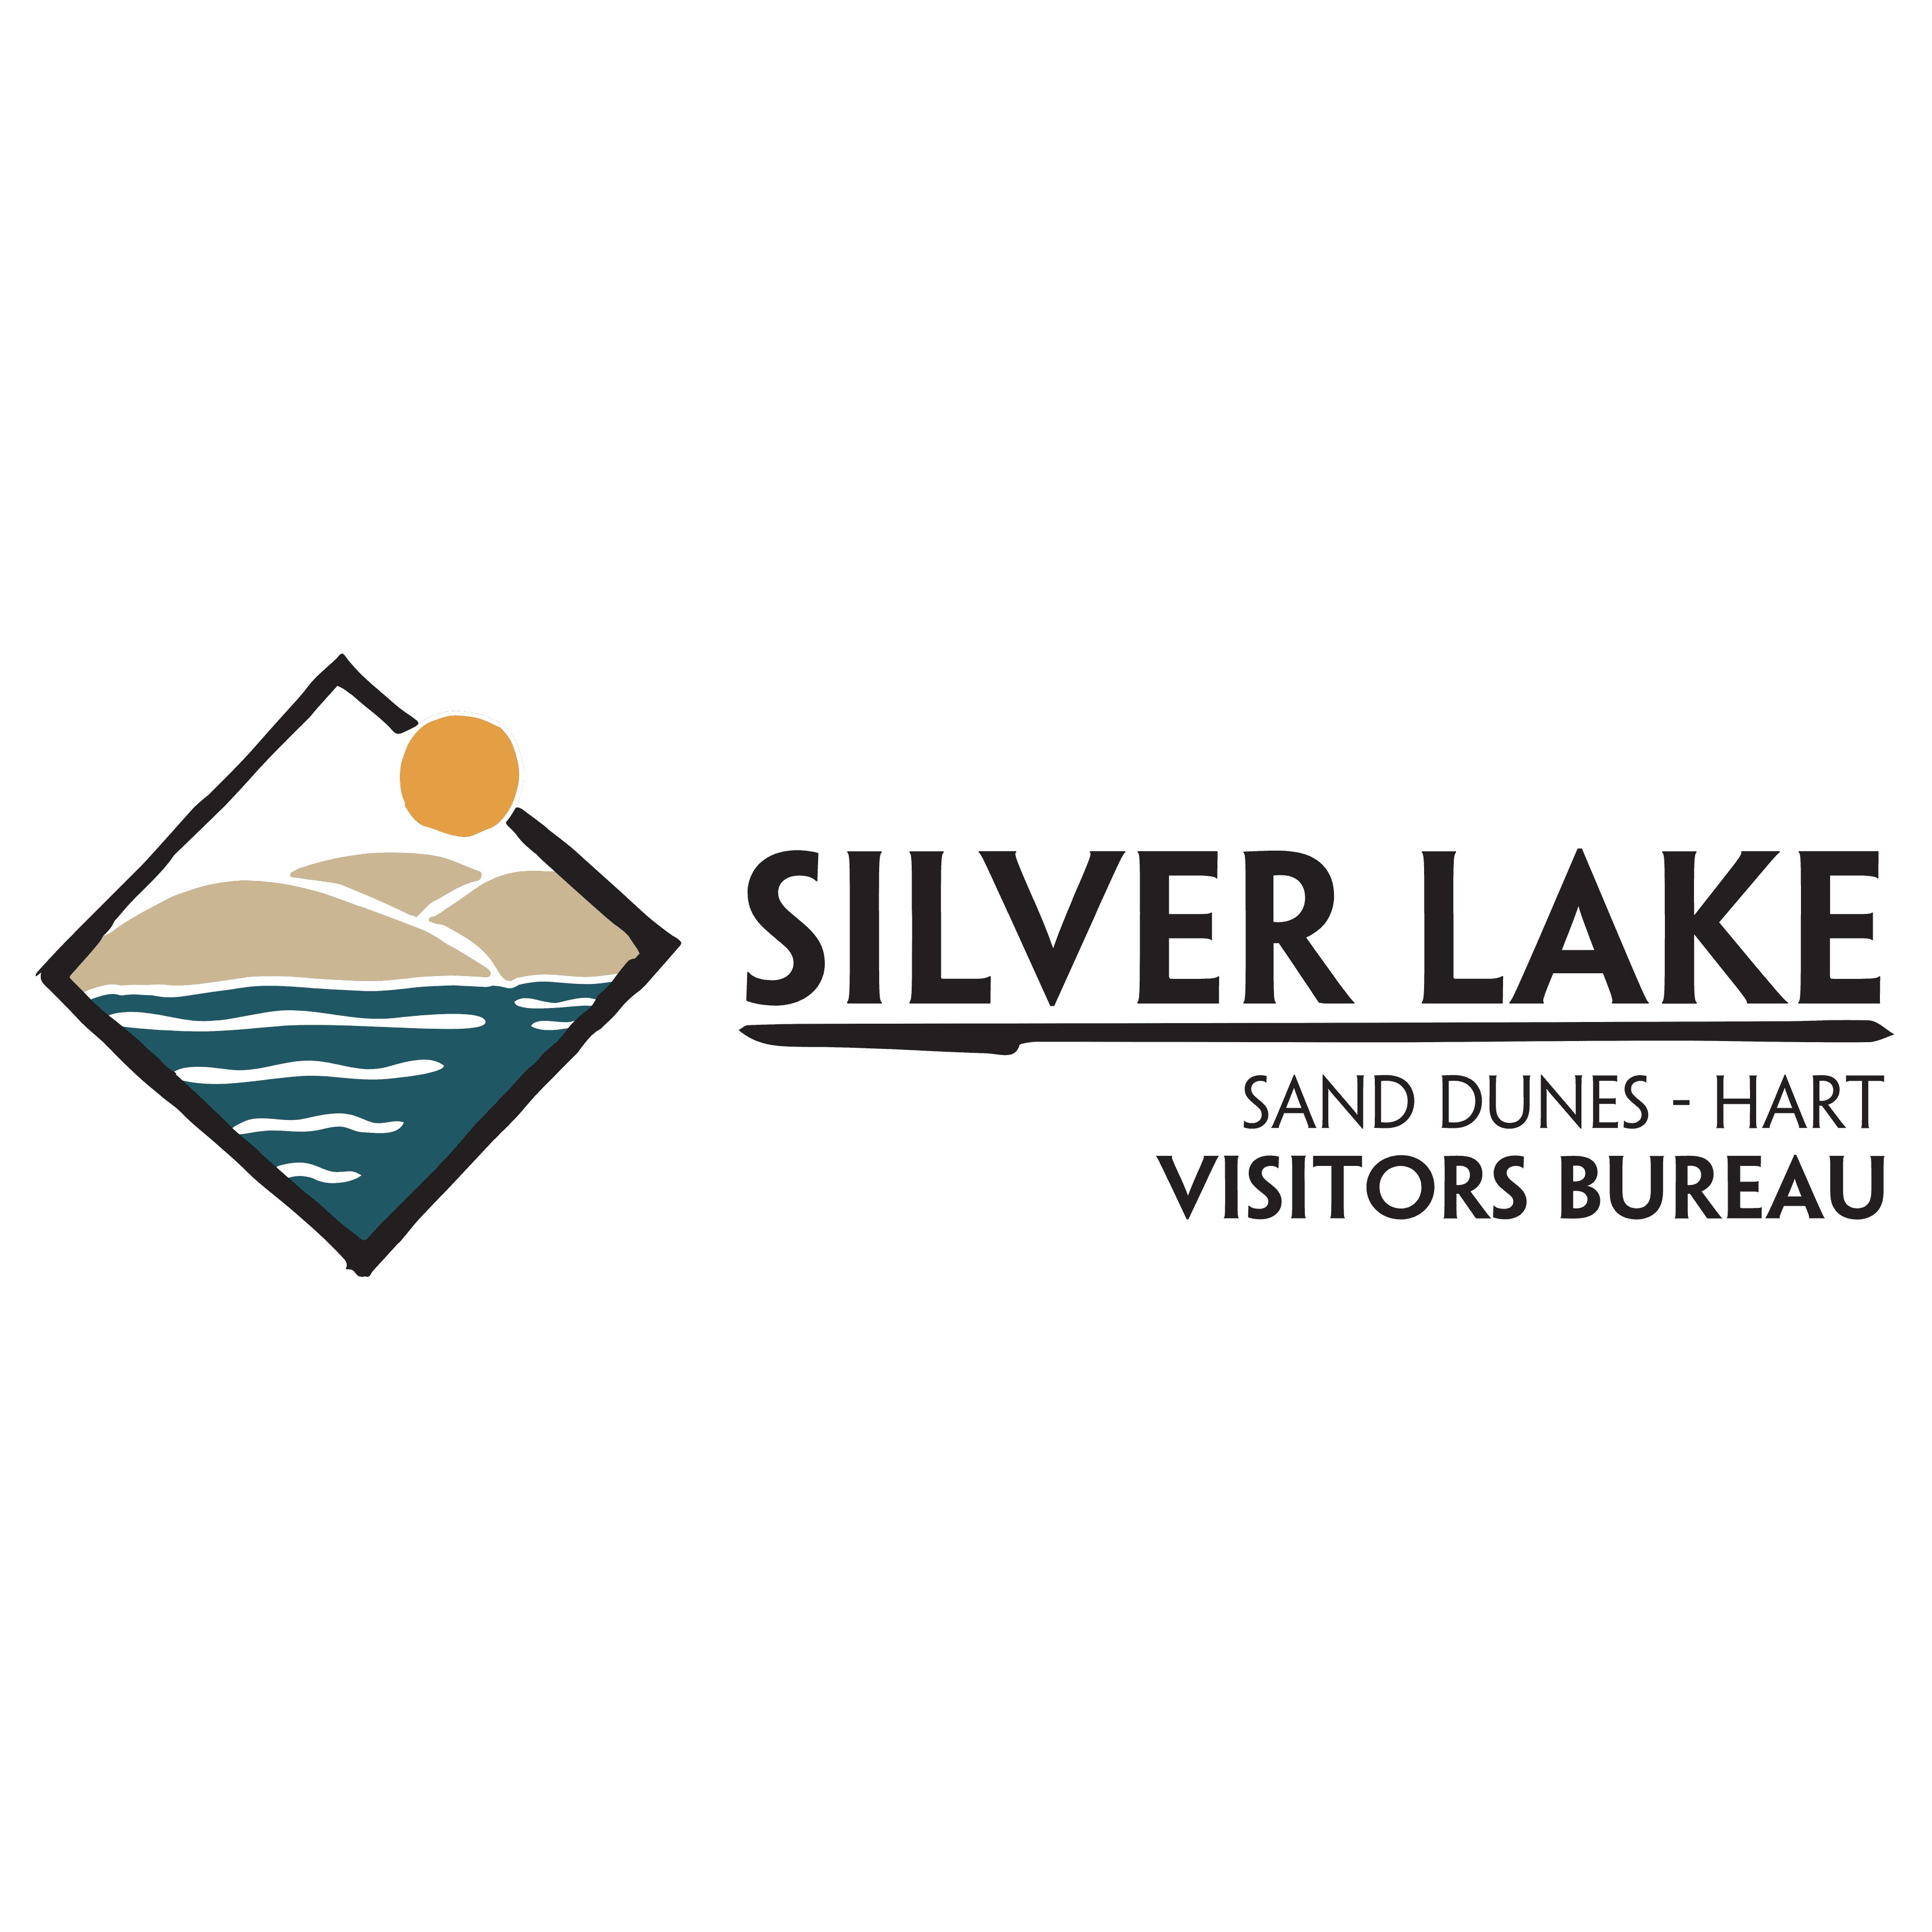 Silver Lake Sand Dunes - Hart Visitor Bureau